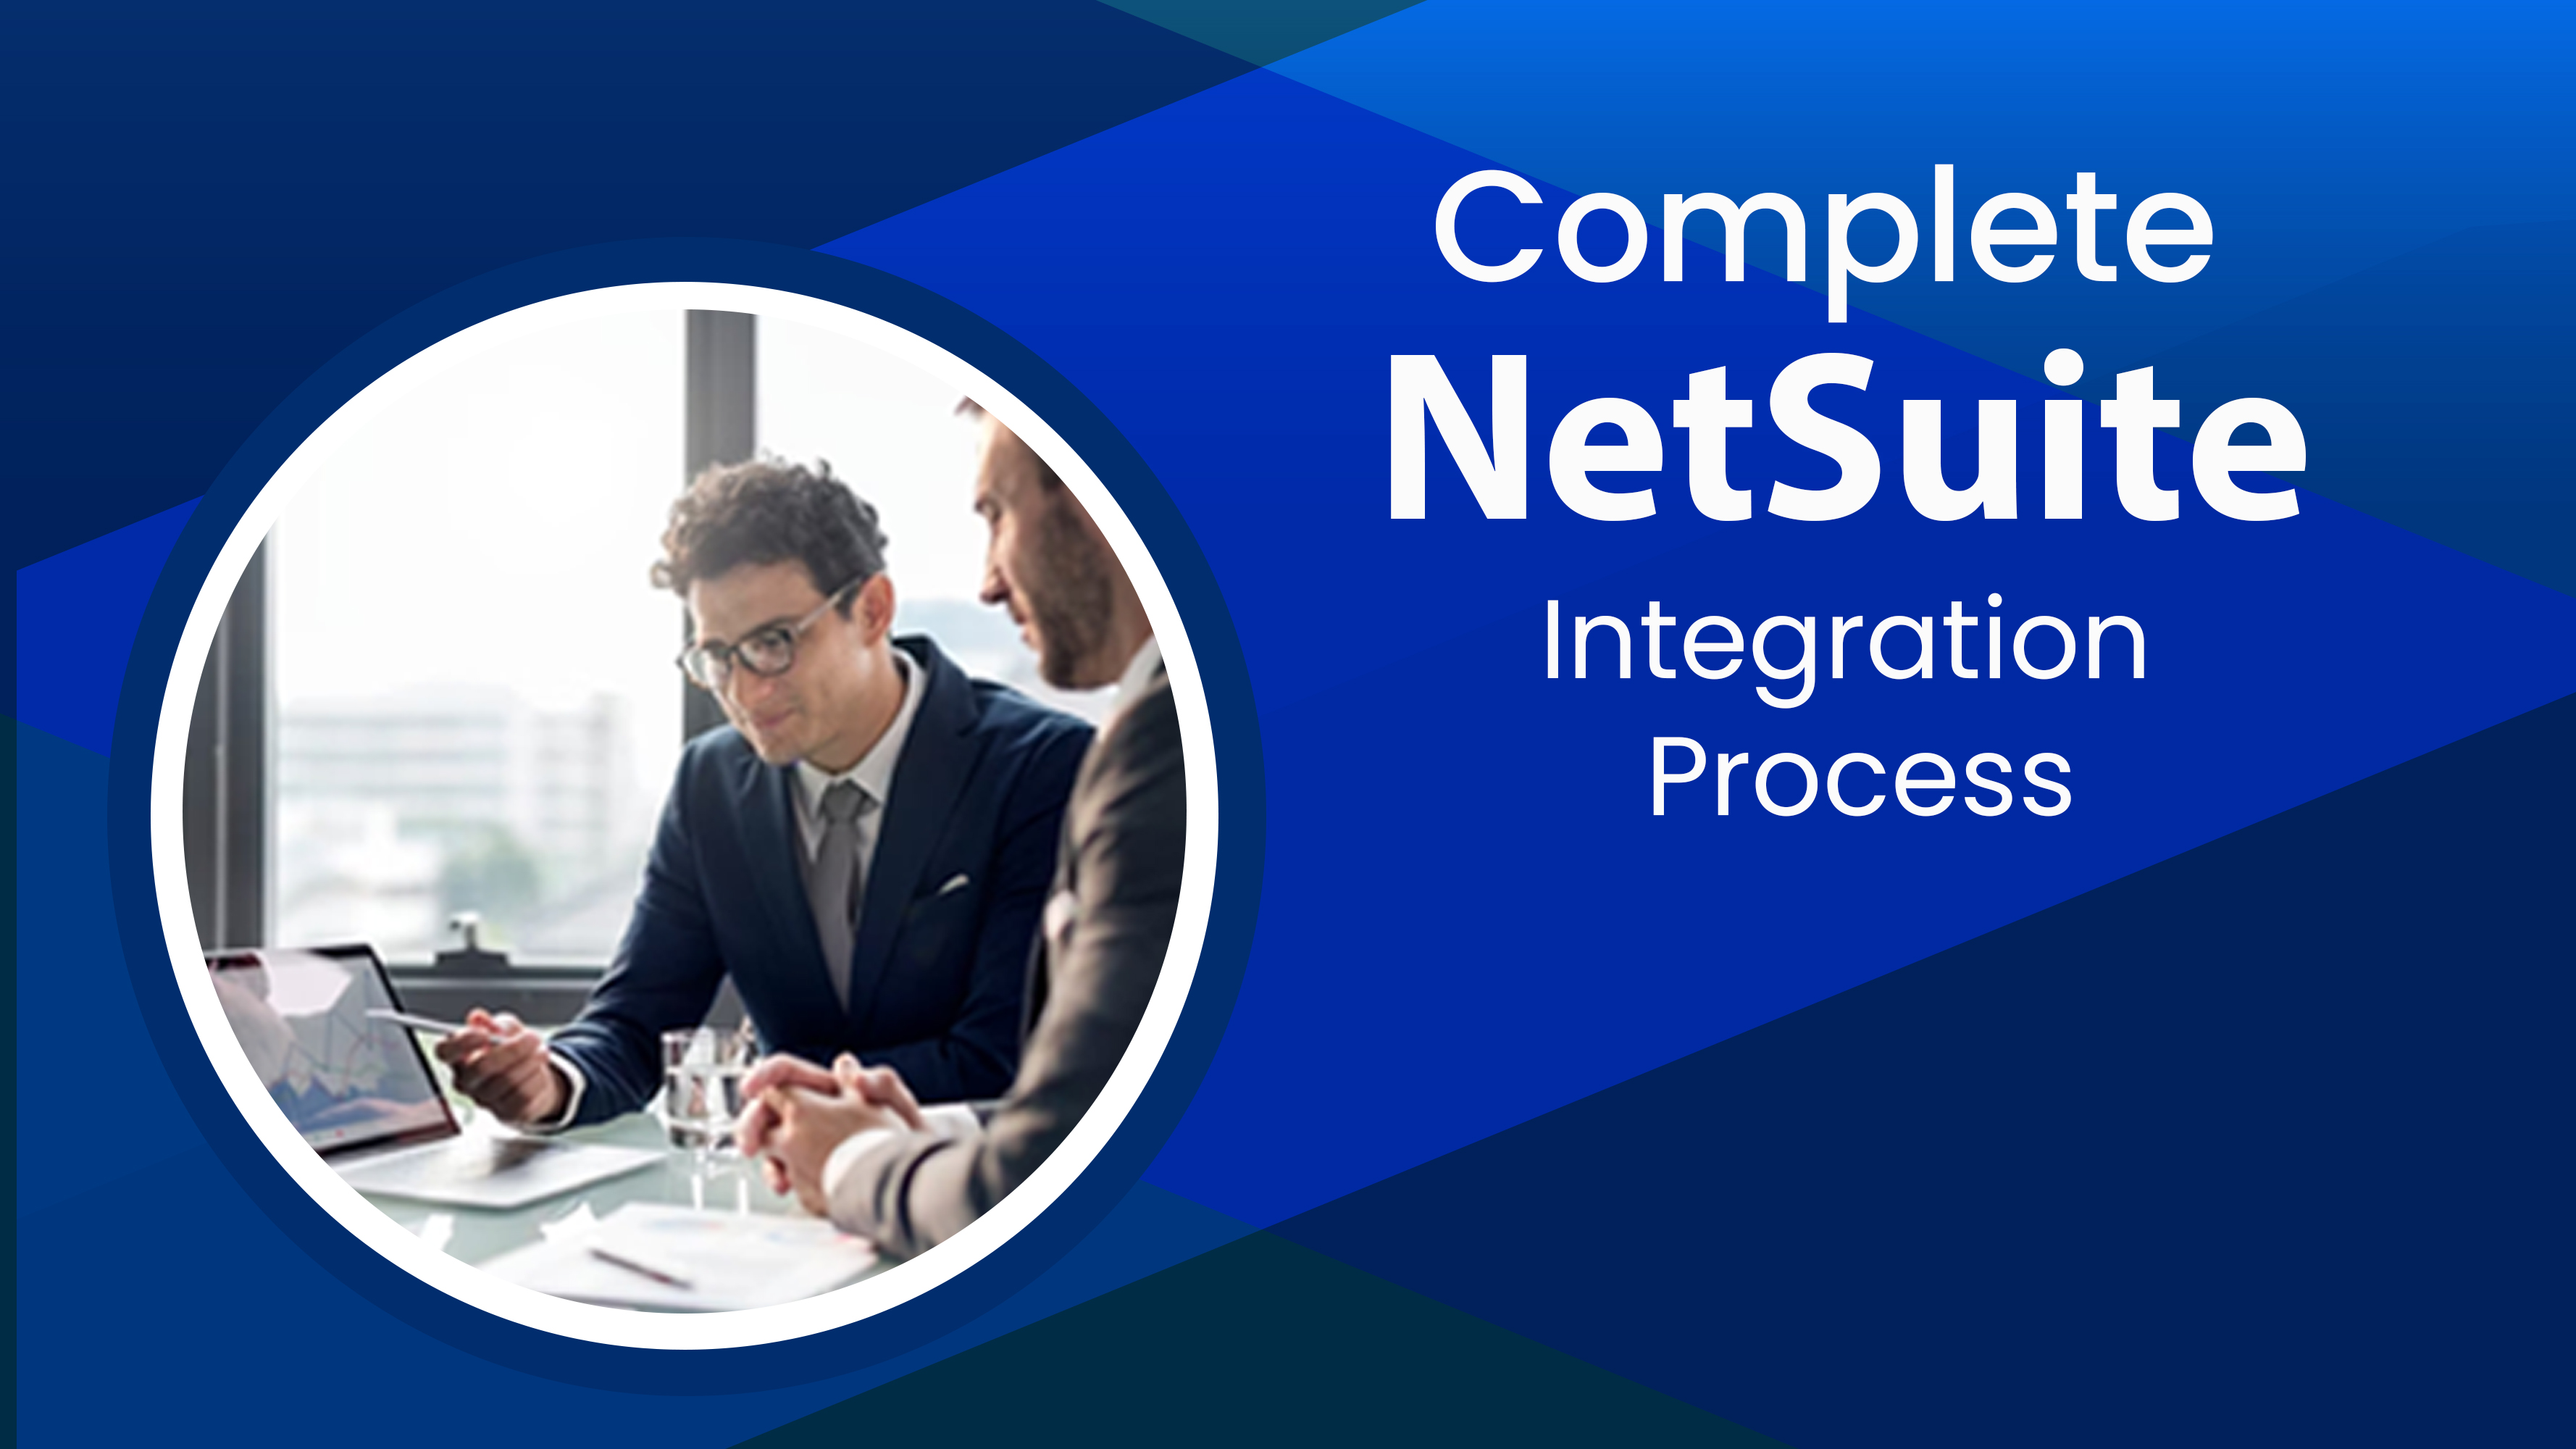 Complete NetSuite Integration Process